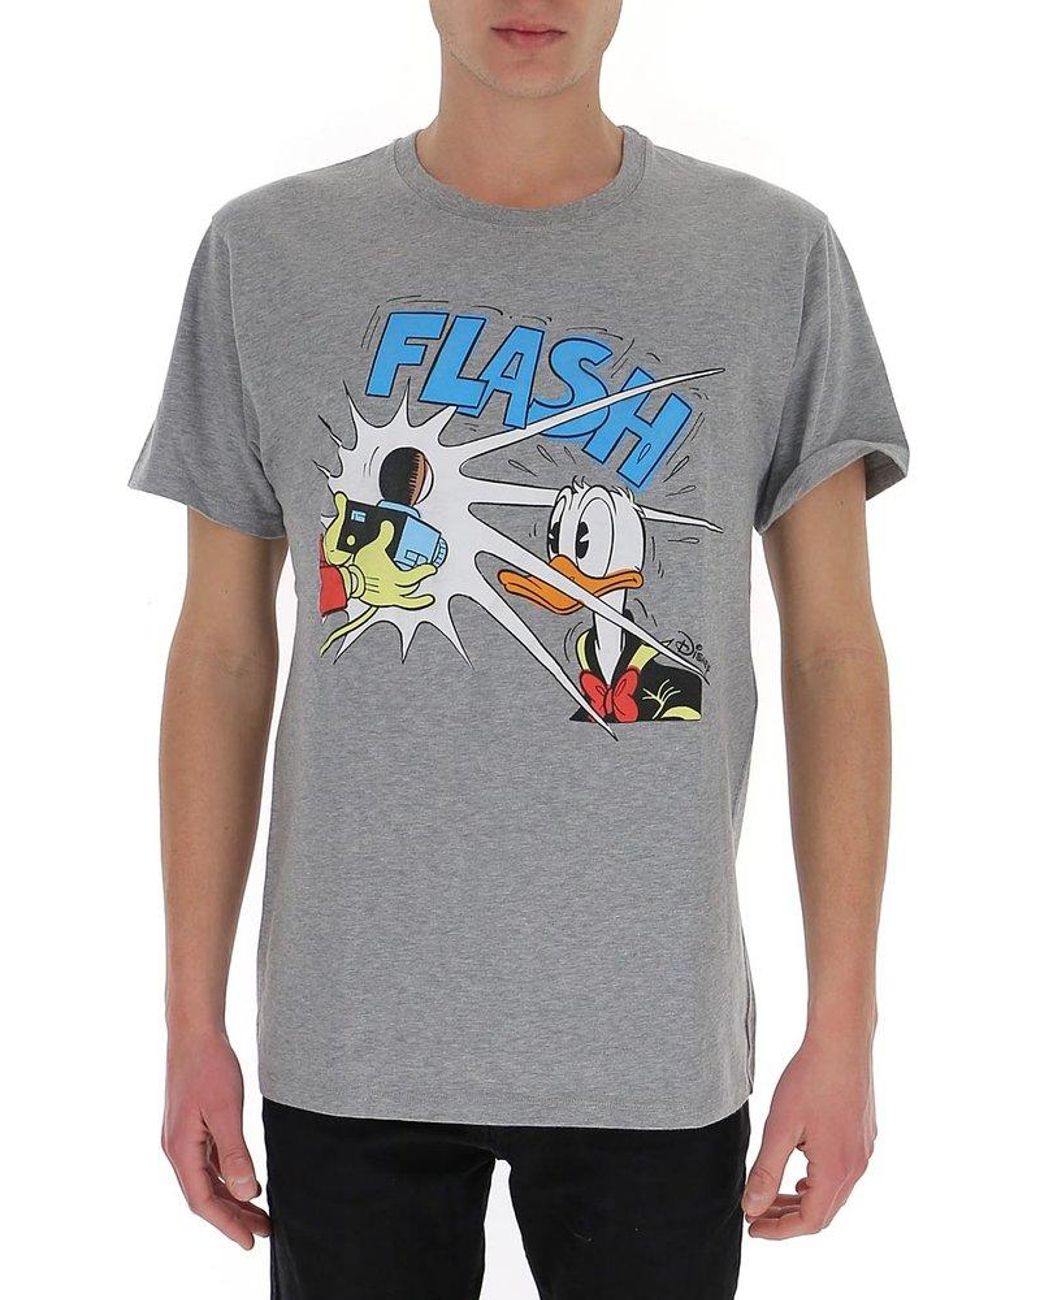 Gucci x Donald Duck© t-shirt - size XL  Gucci shirts, Shark t shirt, Cool  shirts